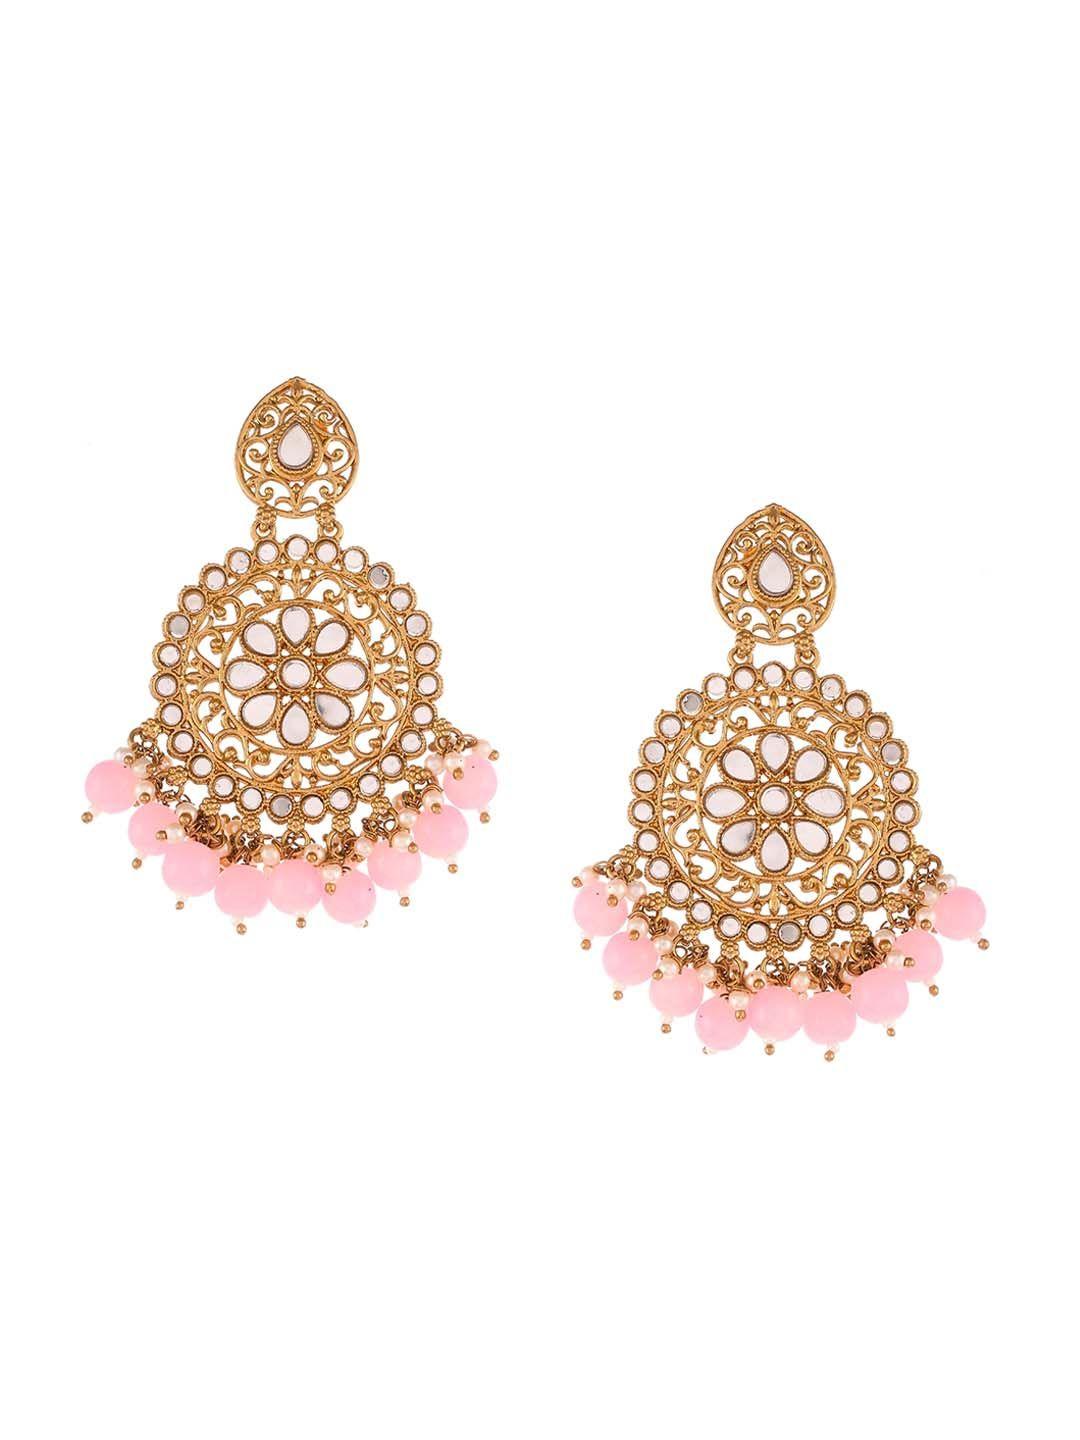 aquastreet jewels gold-plated circular chandbalis earrings